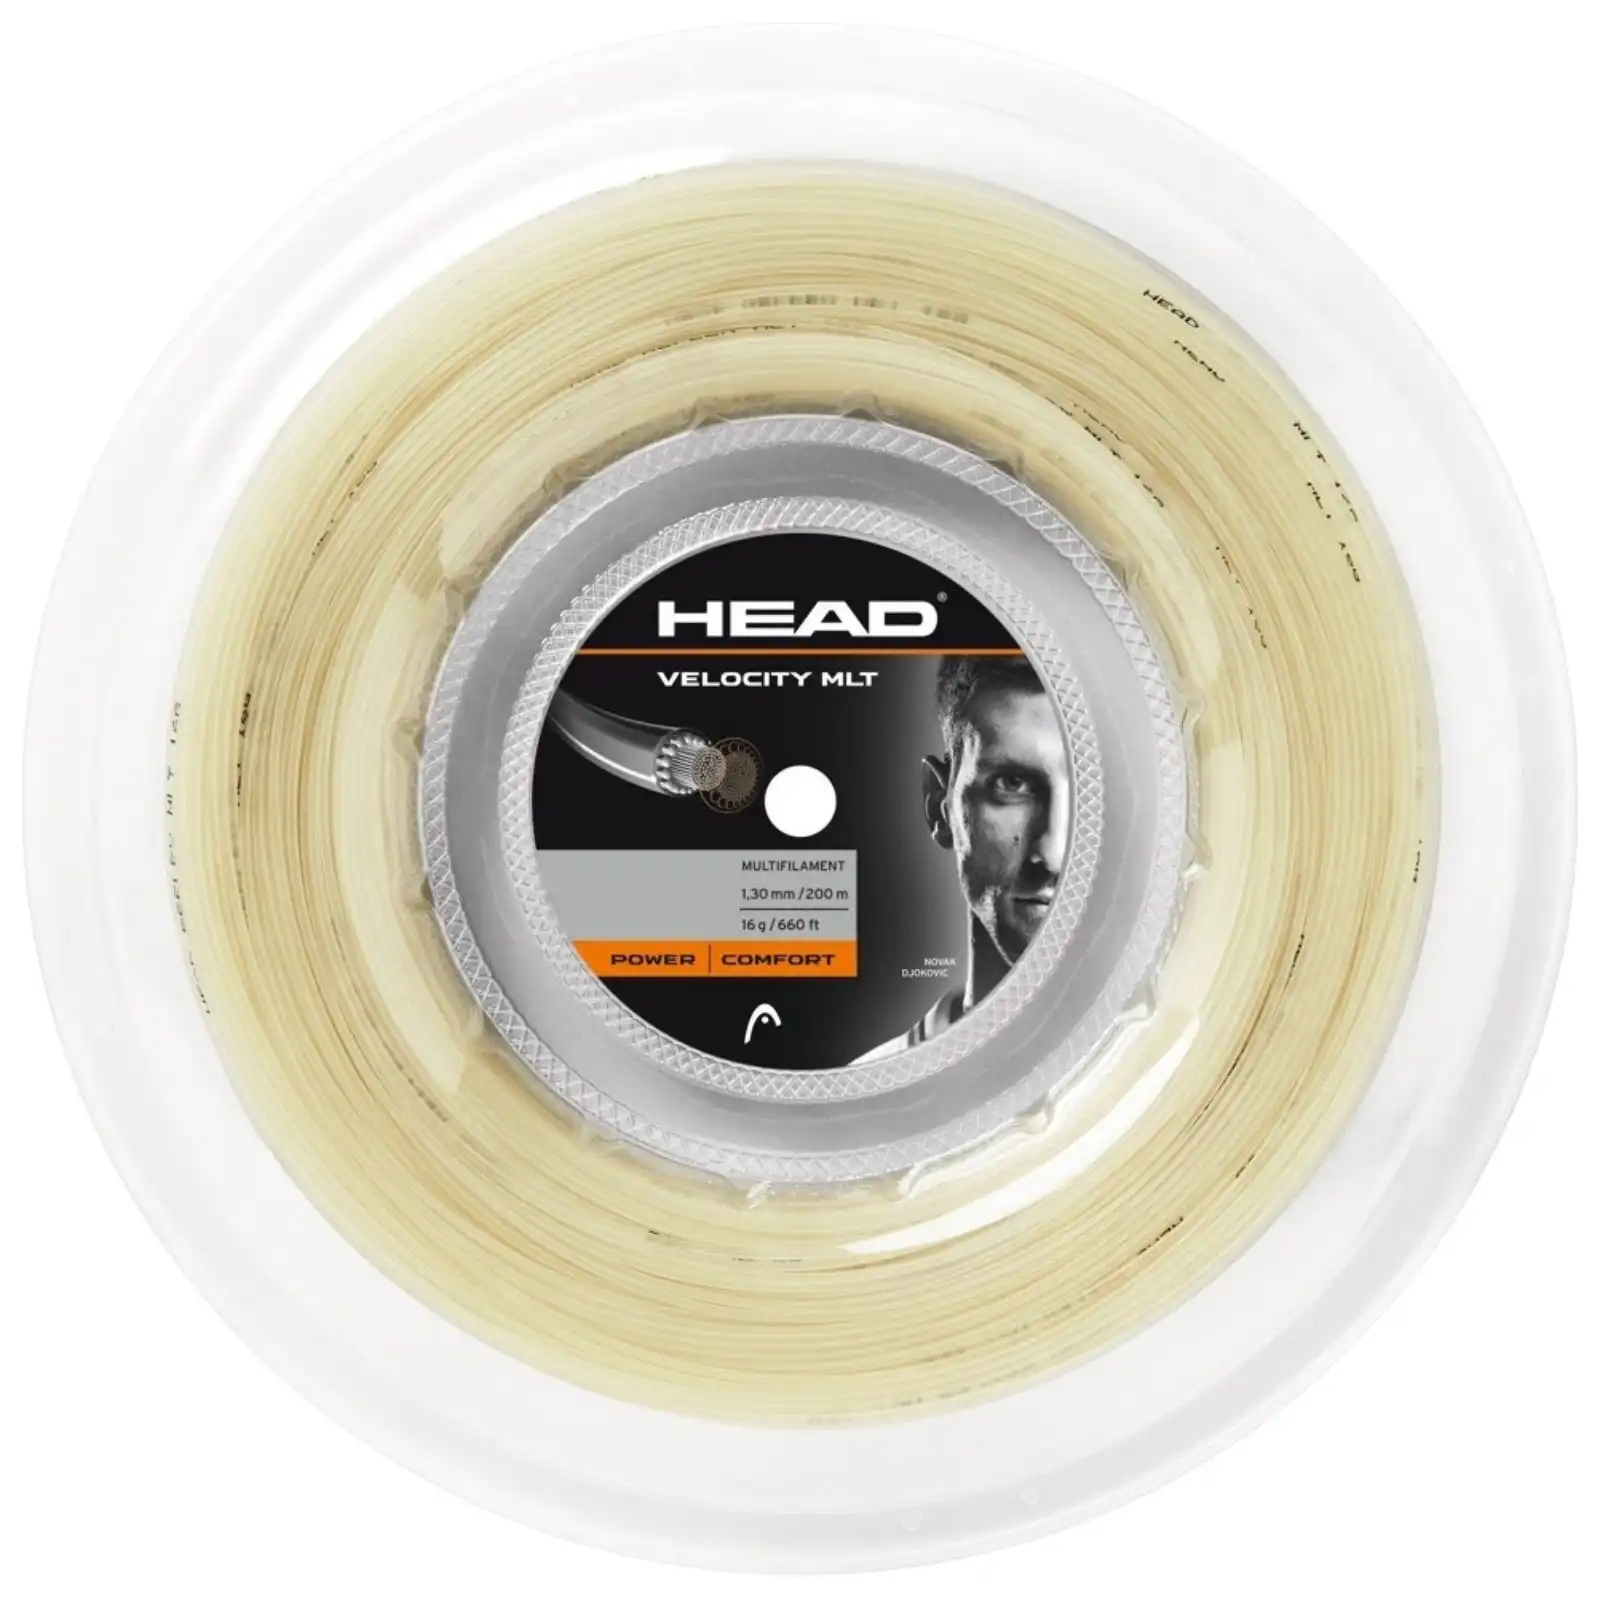 Head Velocity MLT 16g Tennis String Reel 200m 1.30mm Power Comfort - Natural